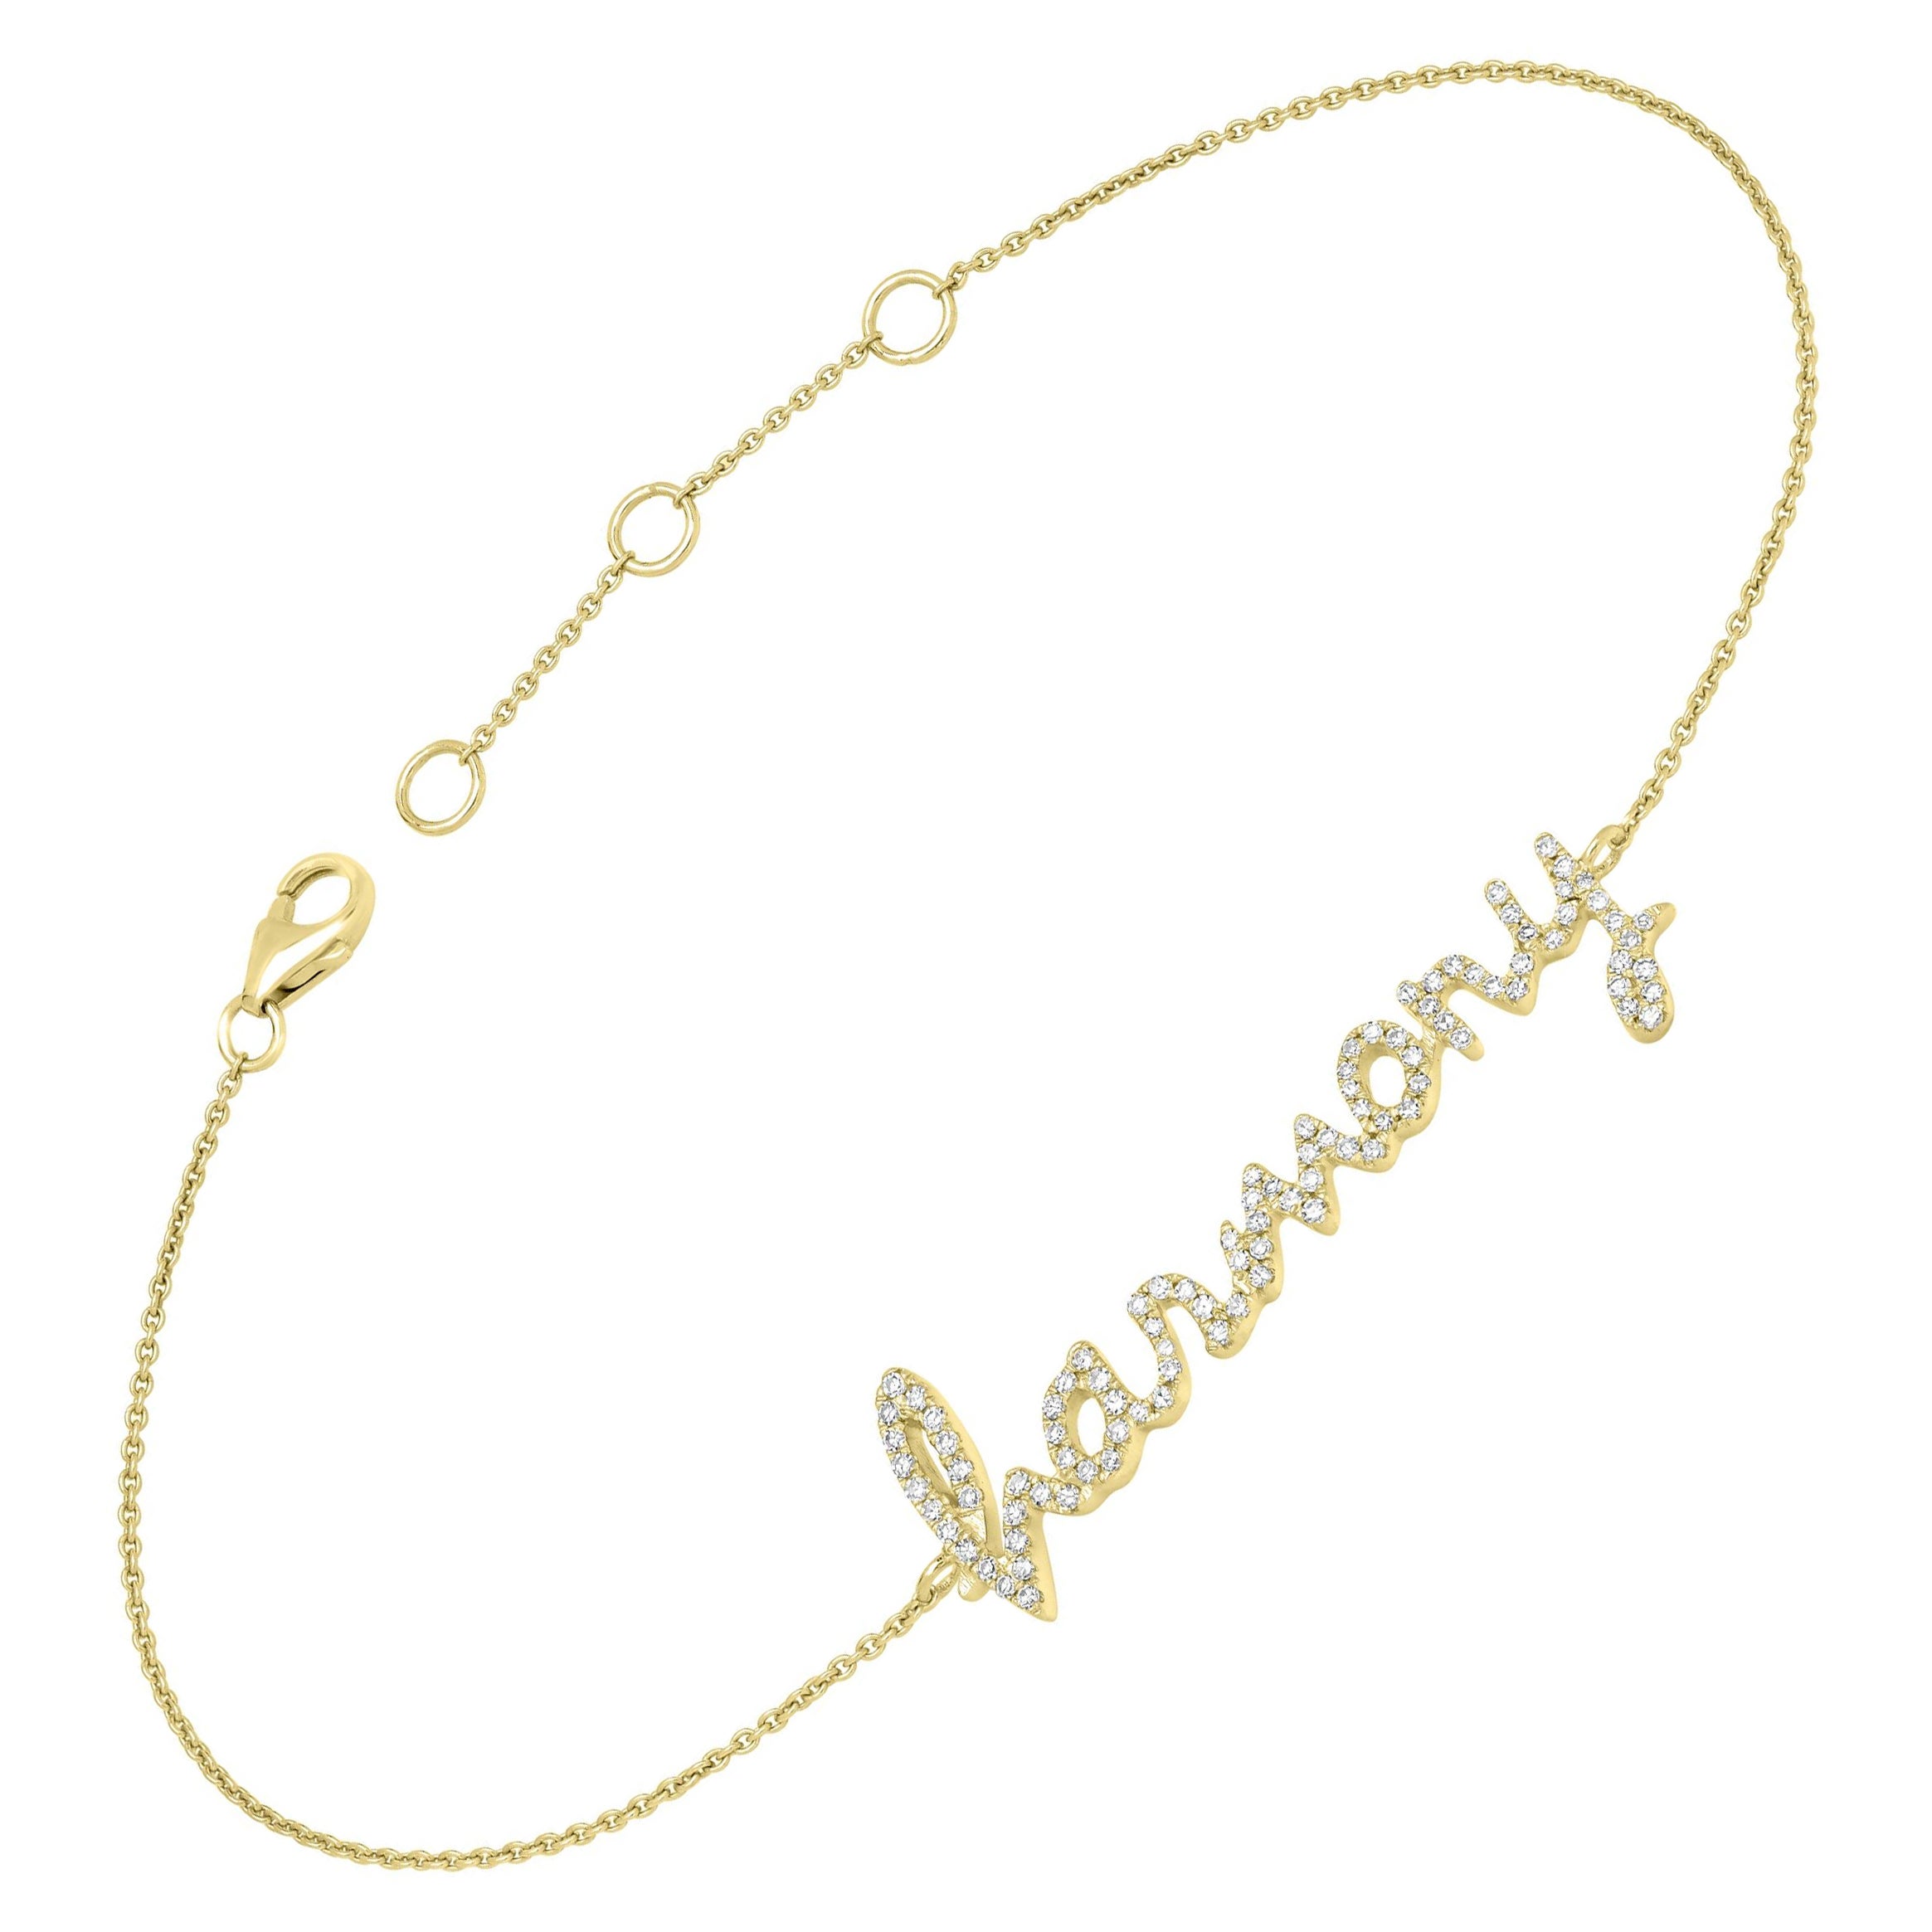 Luxle 14k Gold 1/4 Carat T.W. Diamond "Harmony" Bracelet